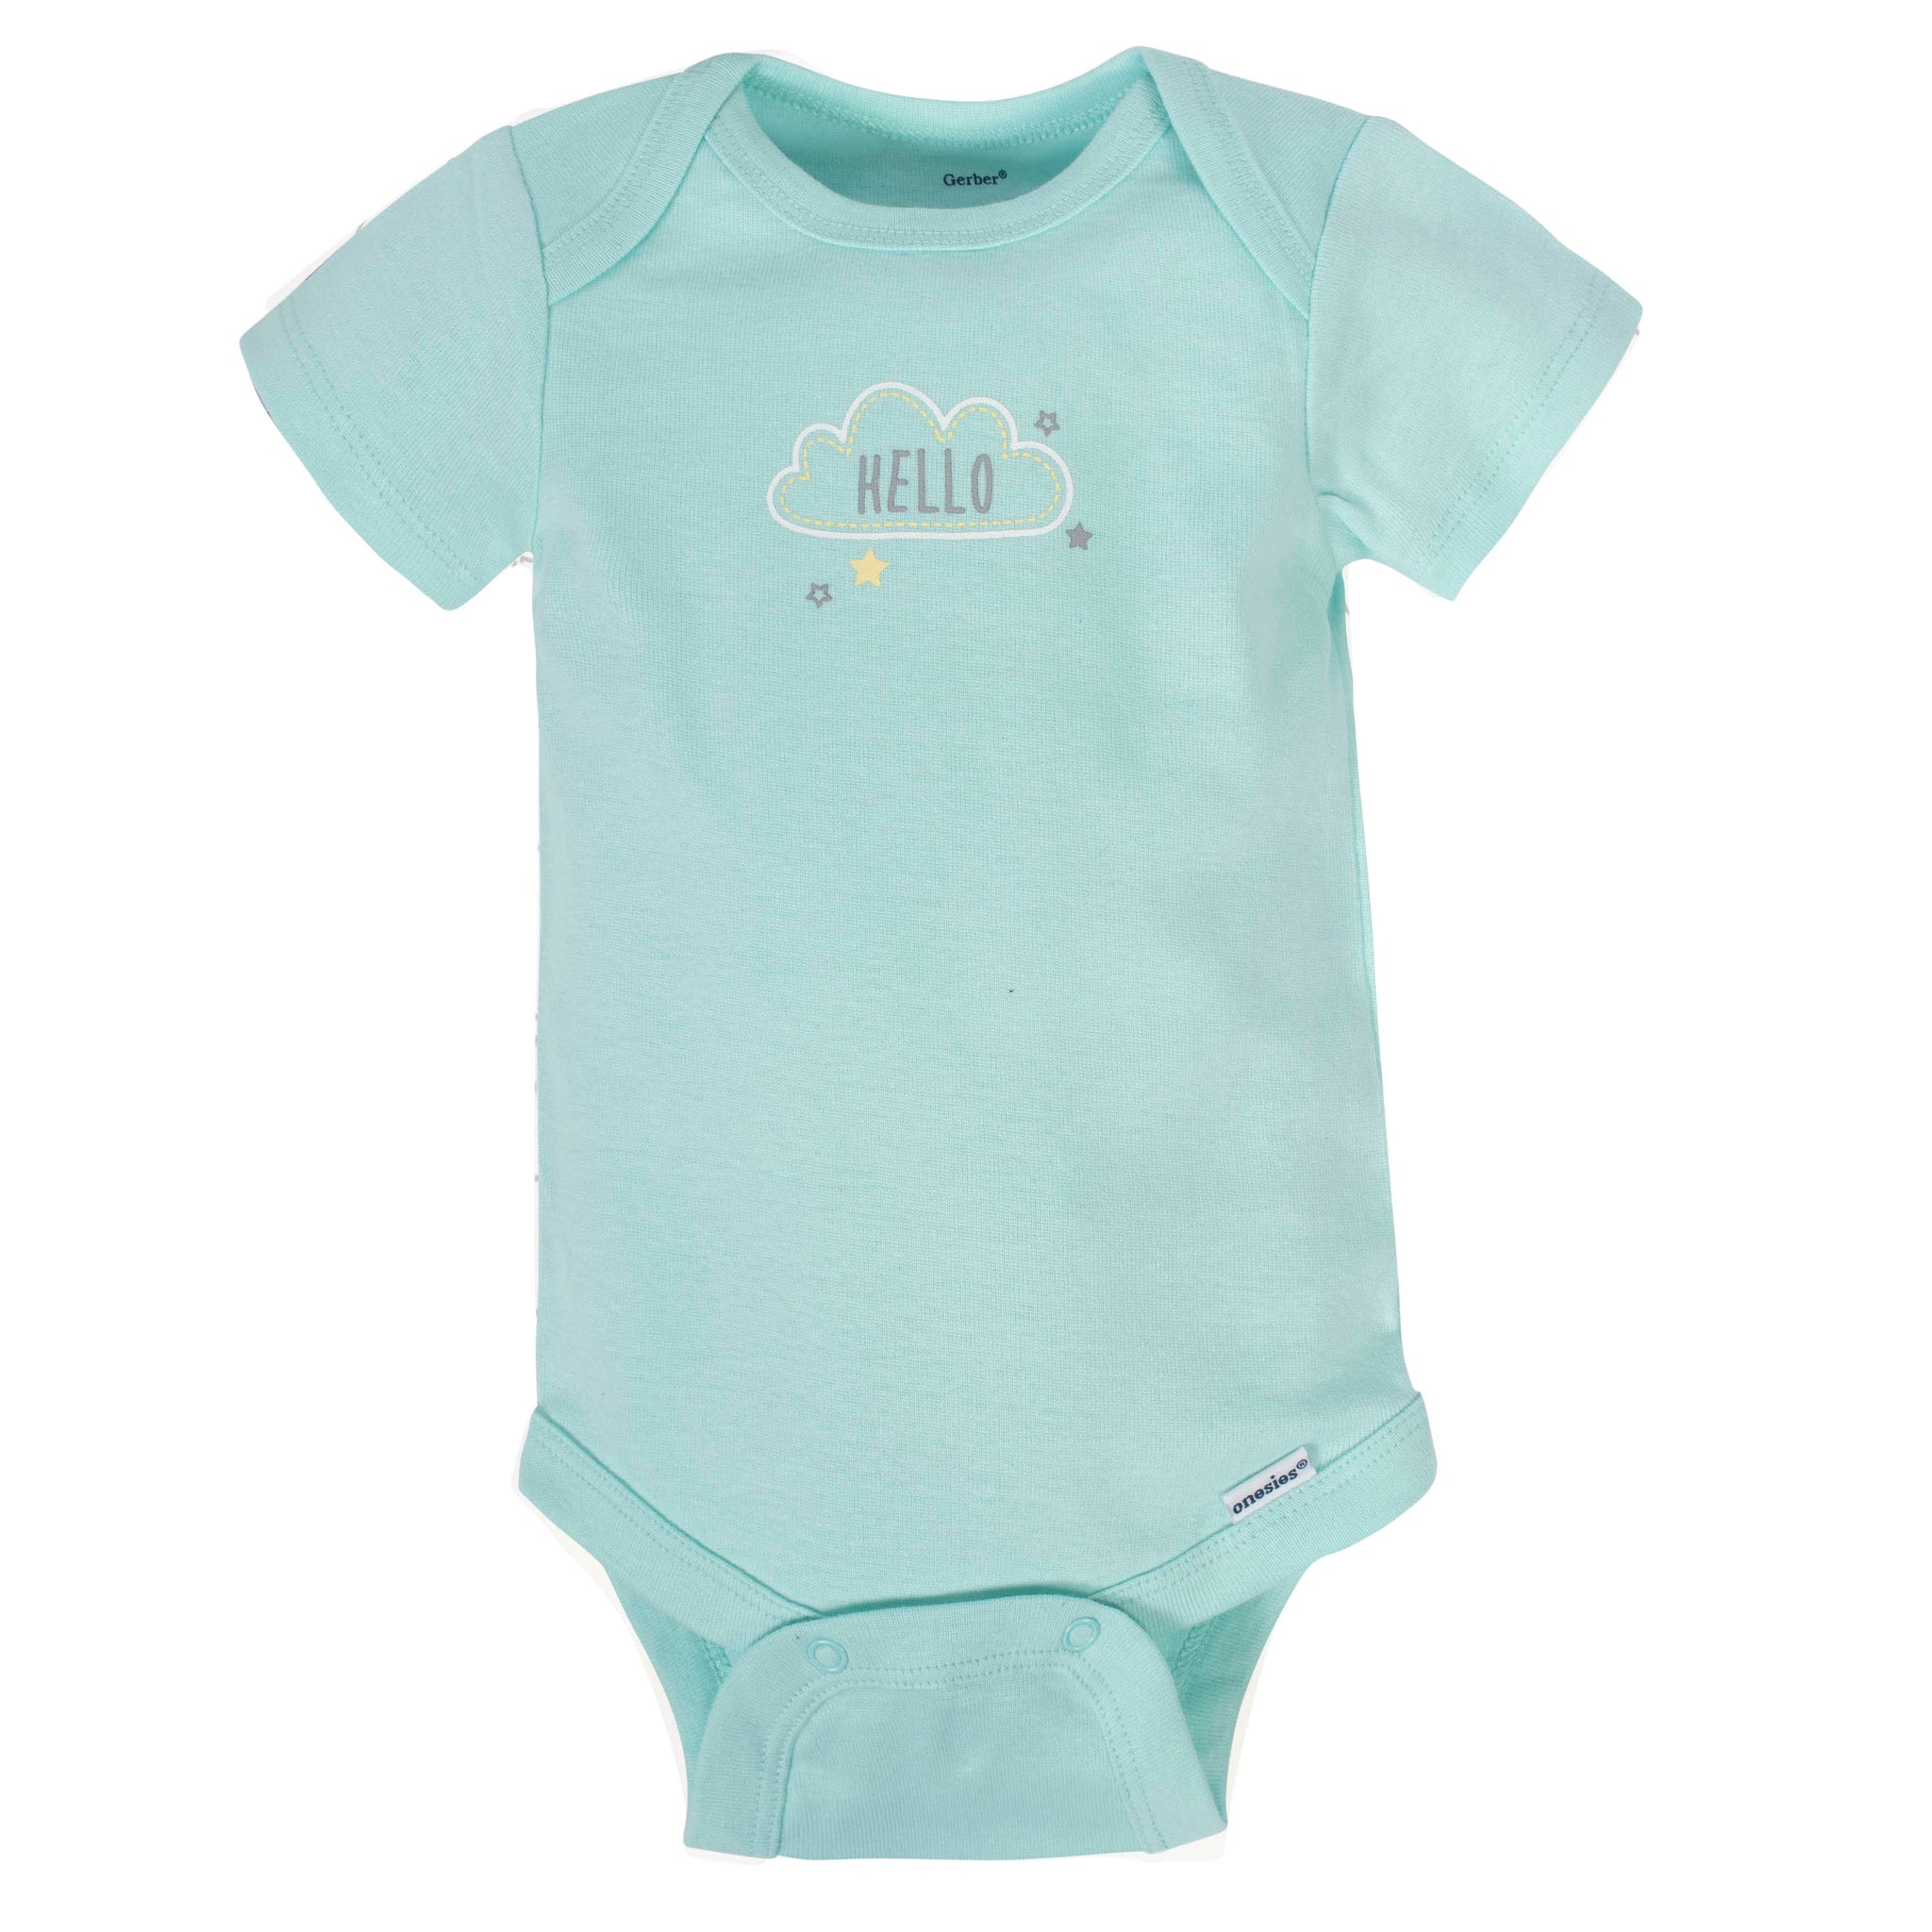 8-Pack Baby Neutral Animals Short Sleeve Onesies® Bodysuits-Gerber Childrenswear Wholesale